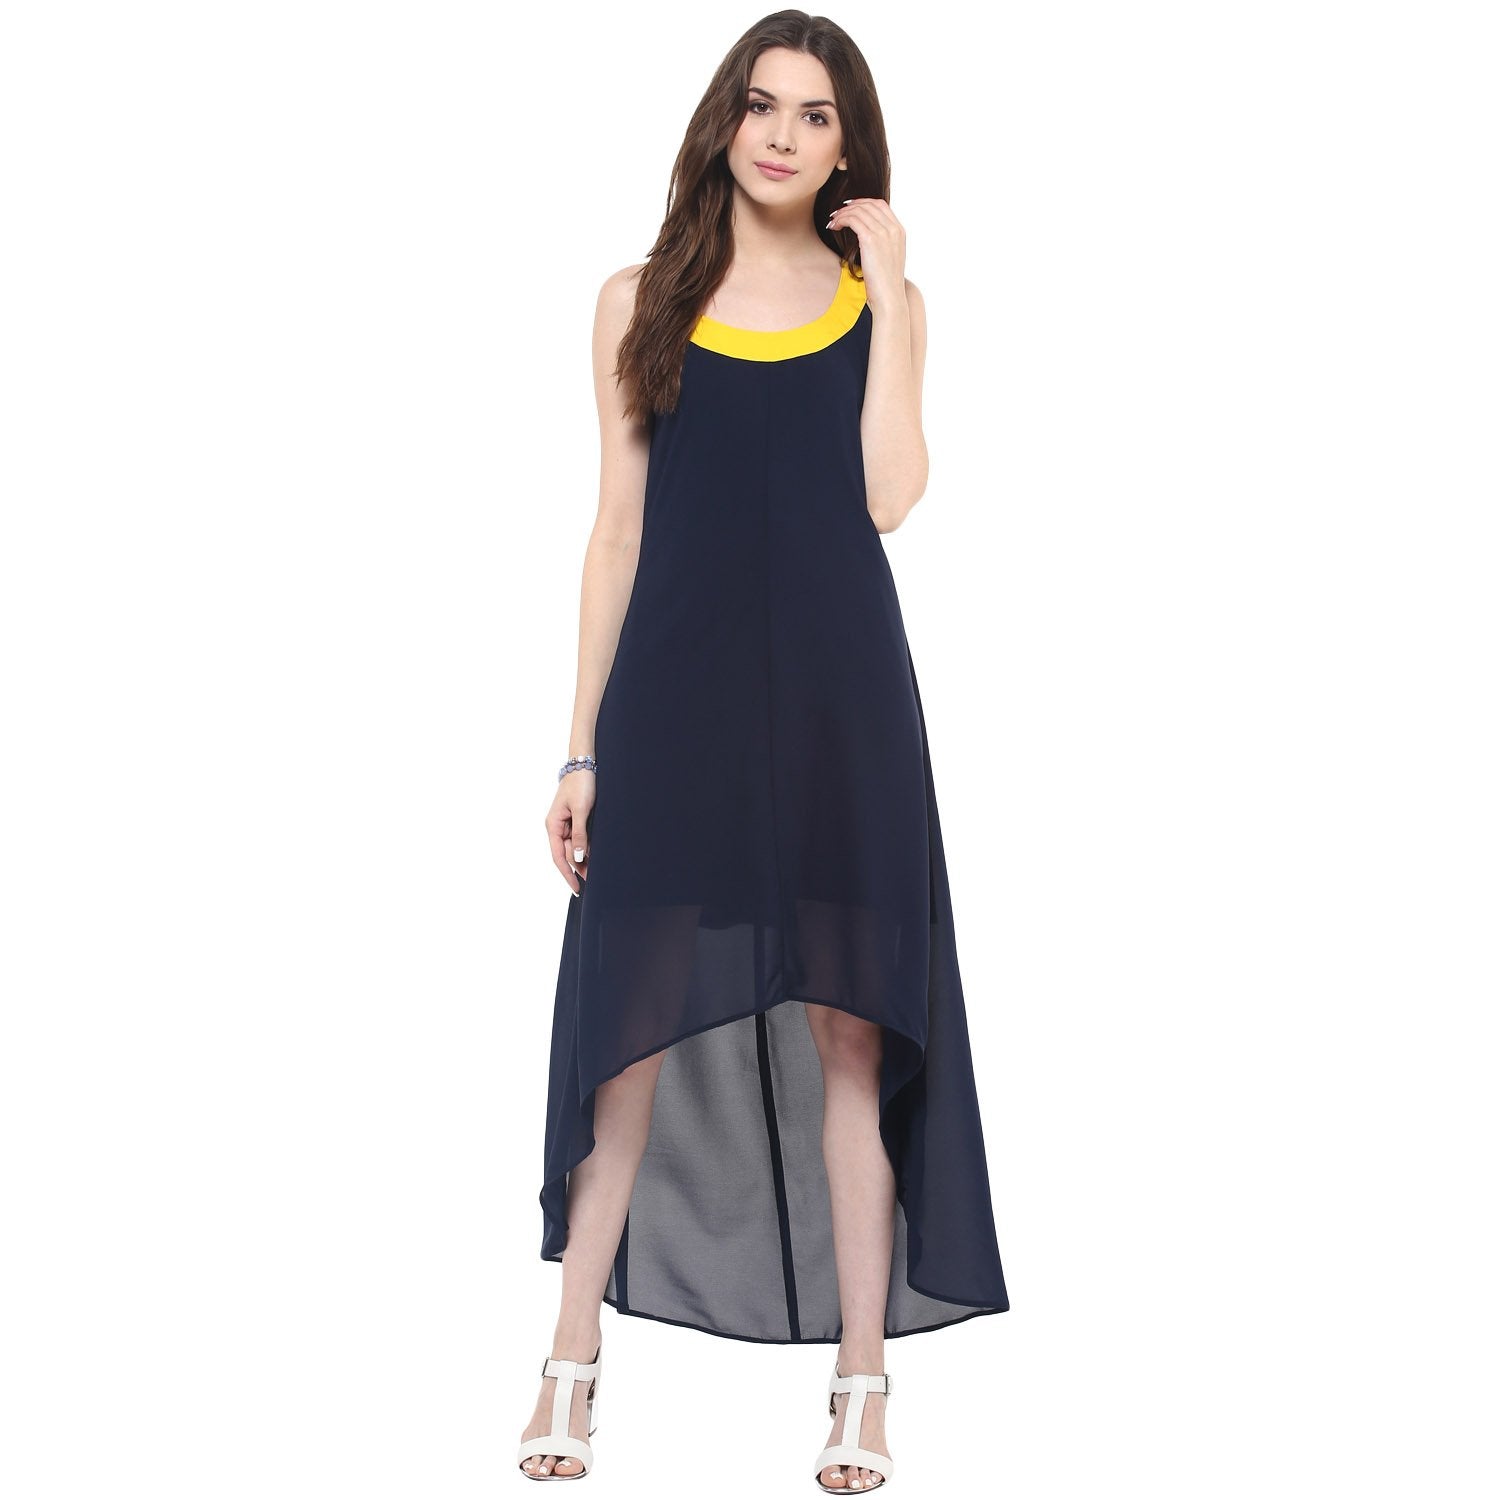 Women's Neon Loose Fit Dress - Pannkh